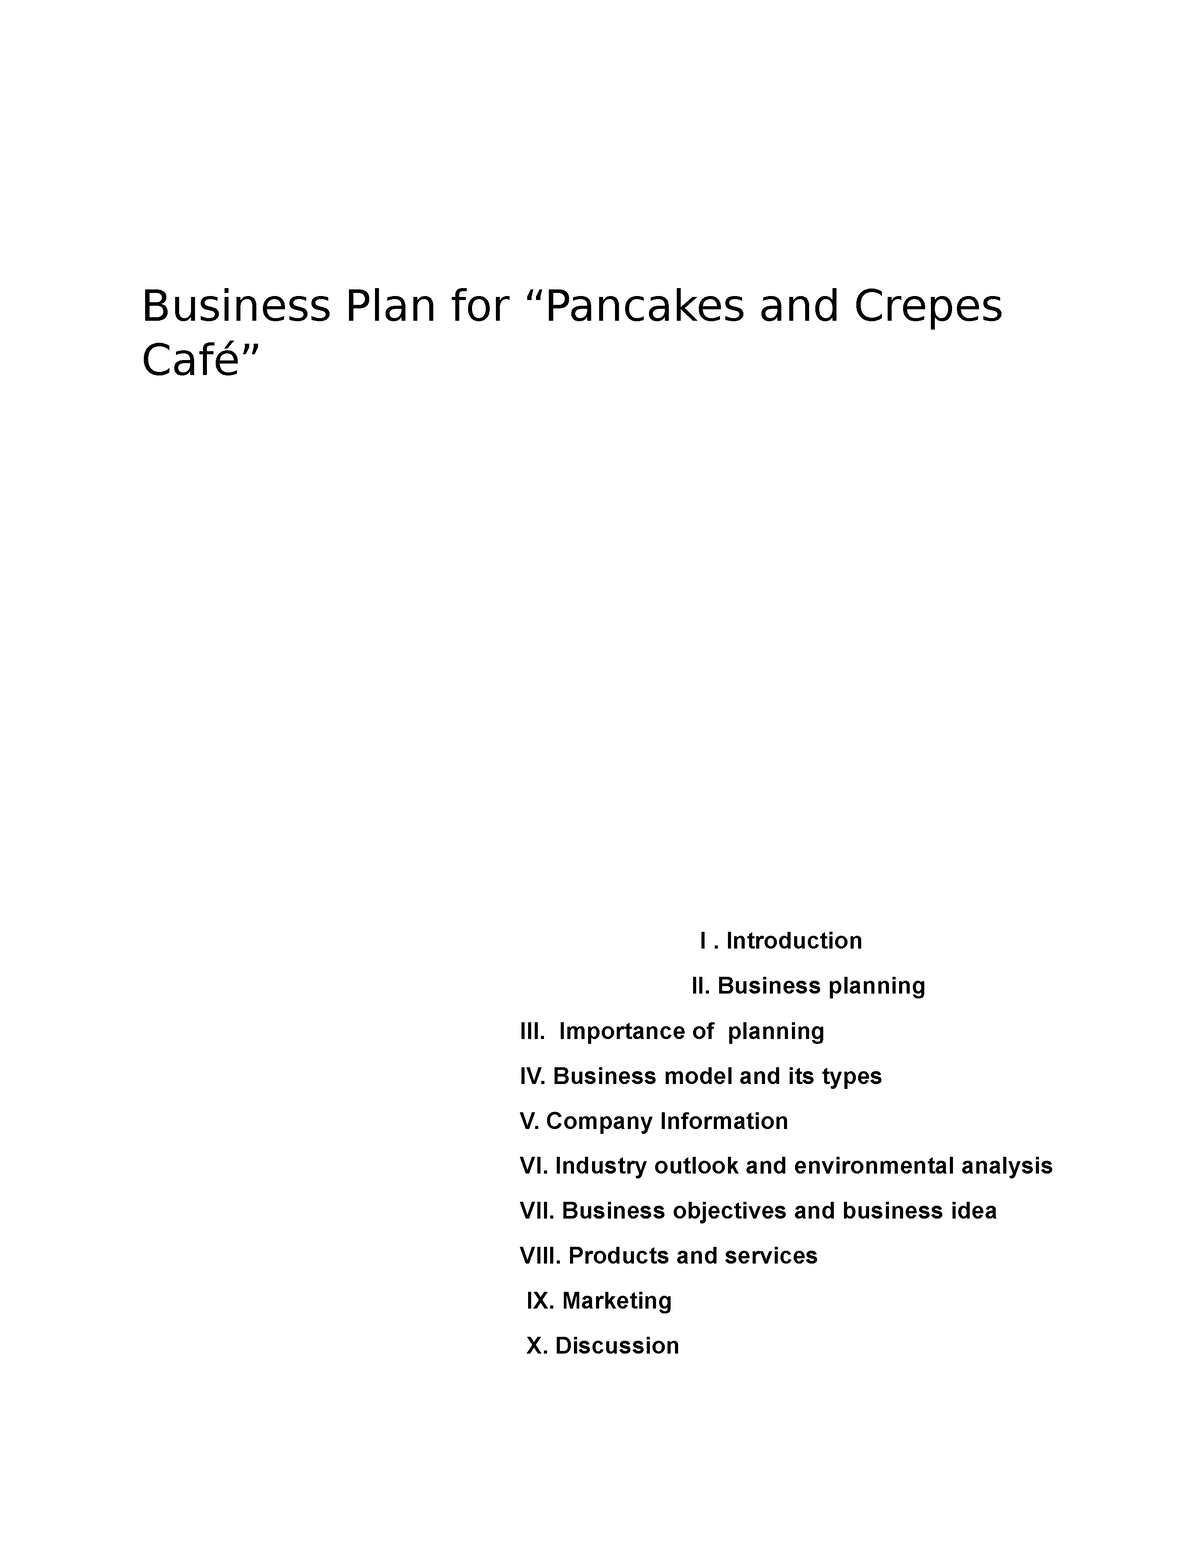 pancake business plan description